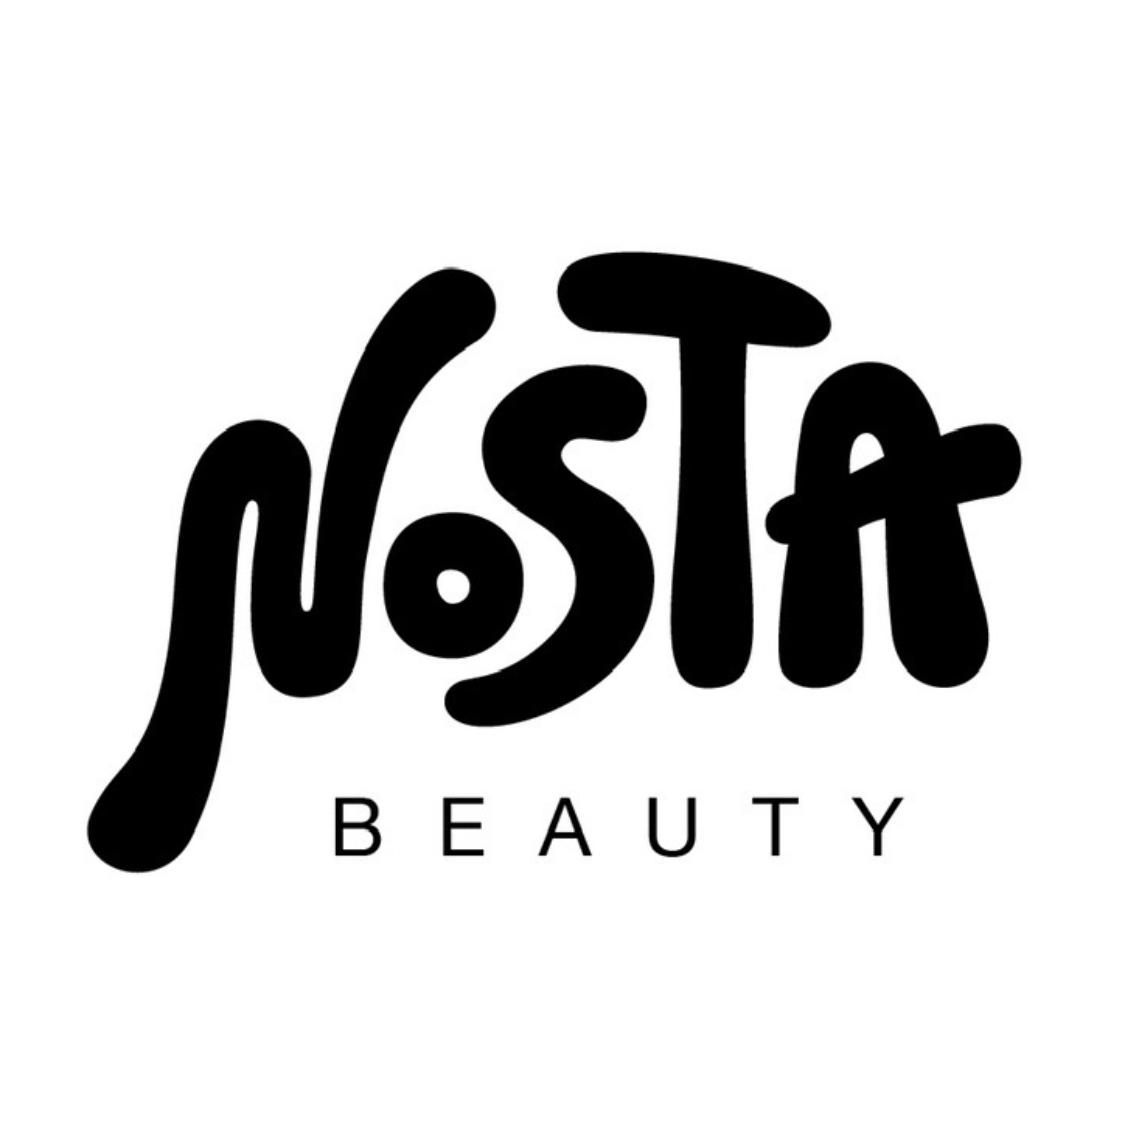 Nosta Beauty's images